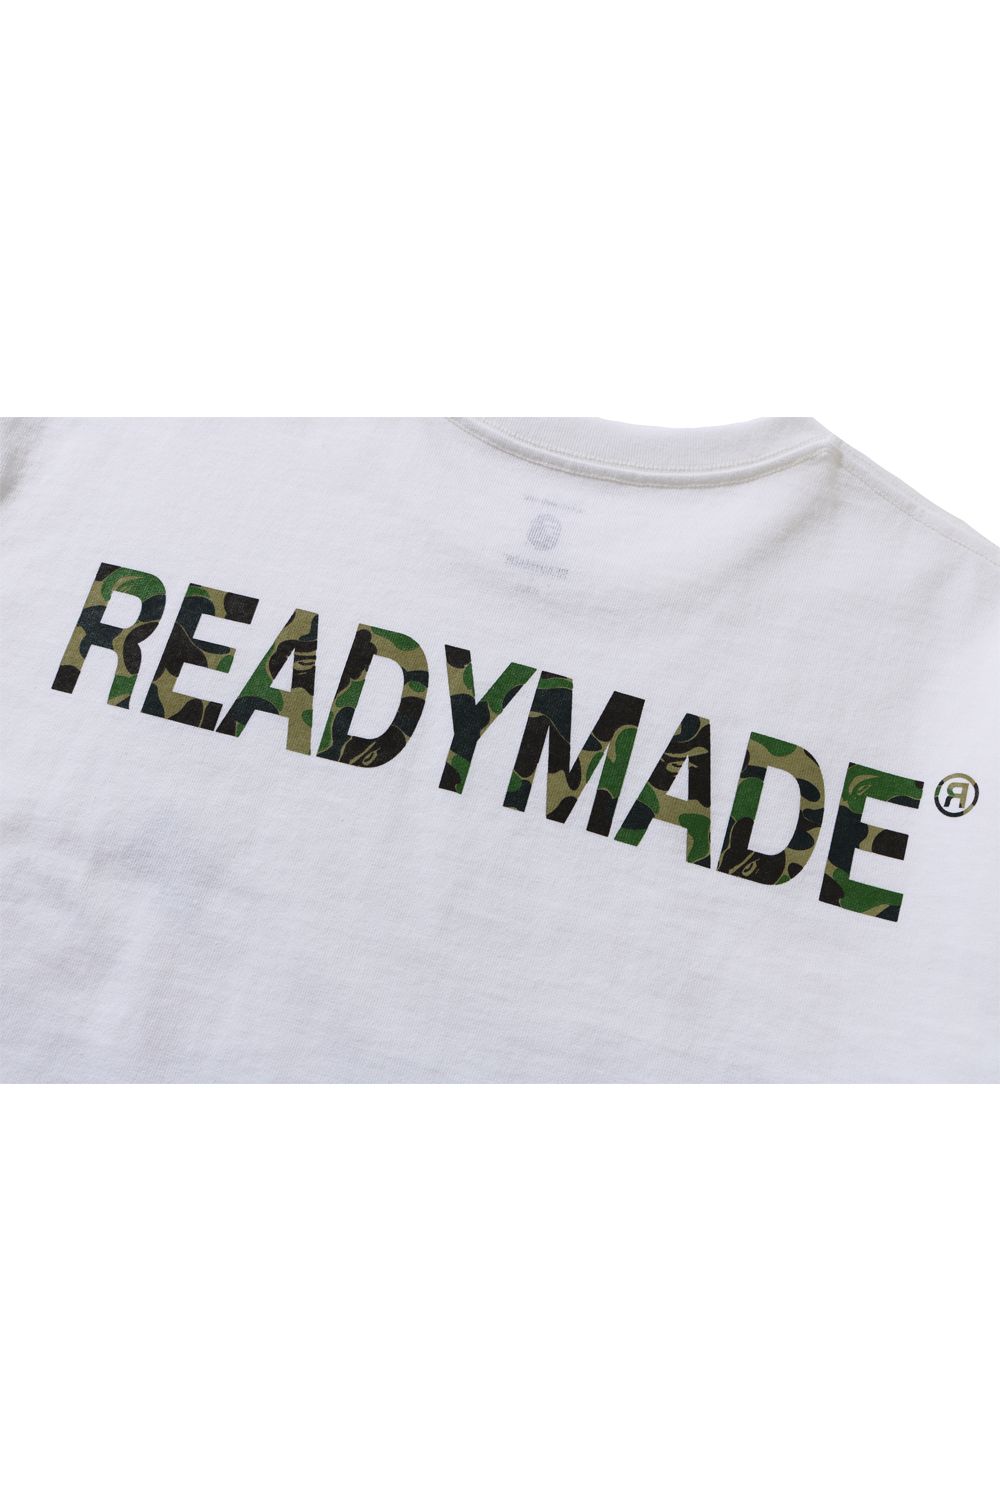 READYMADE - READYMADE × A BATHING APE ® 3 PACK TEE / レディメイド